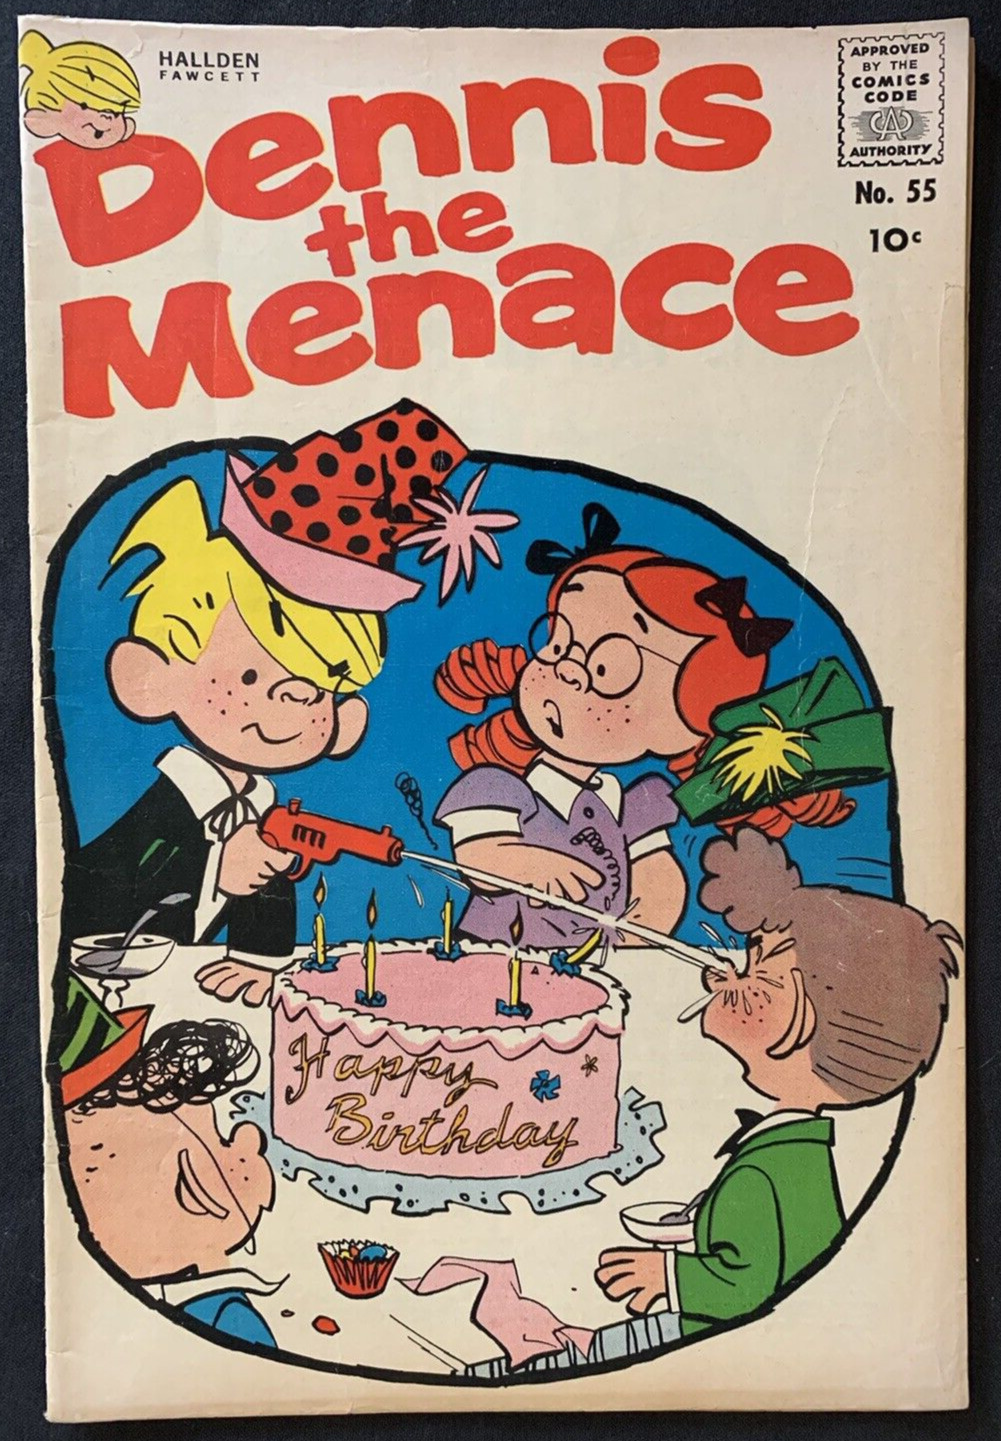 DENNIS THE MENACE #55 Hallden Fawcett 1961 - Birthday Issue Original Owner